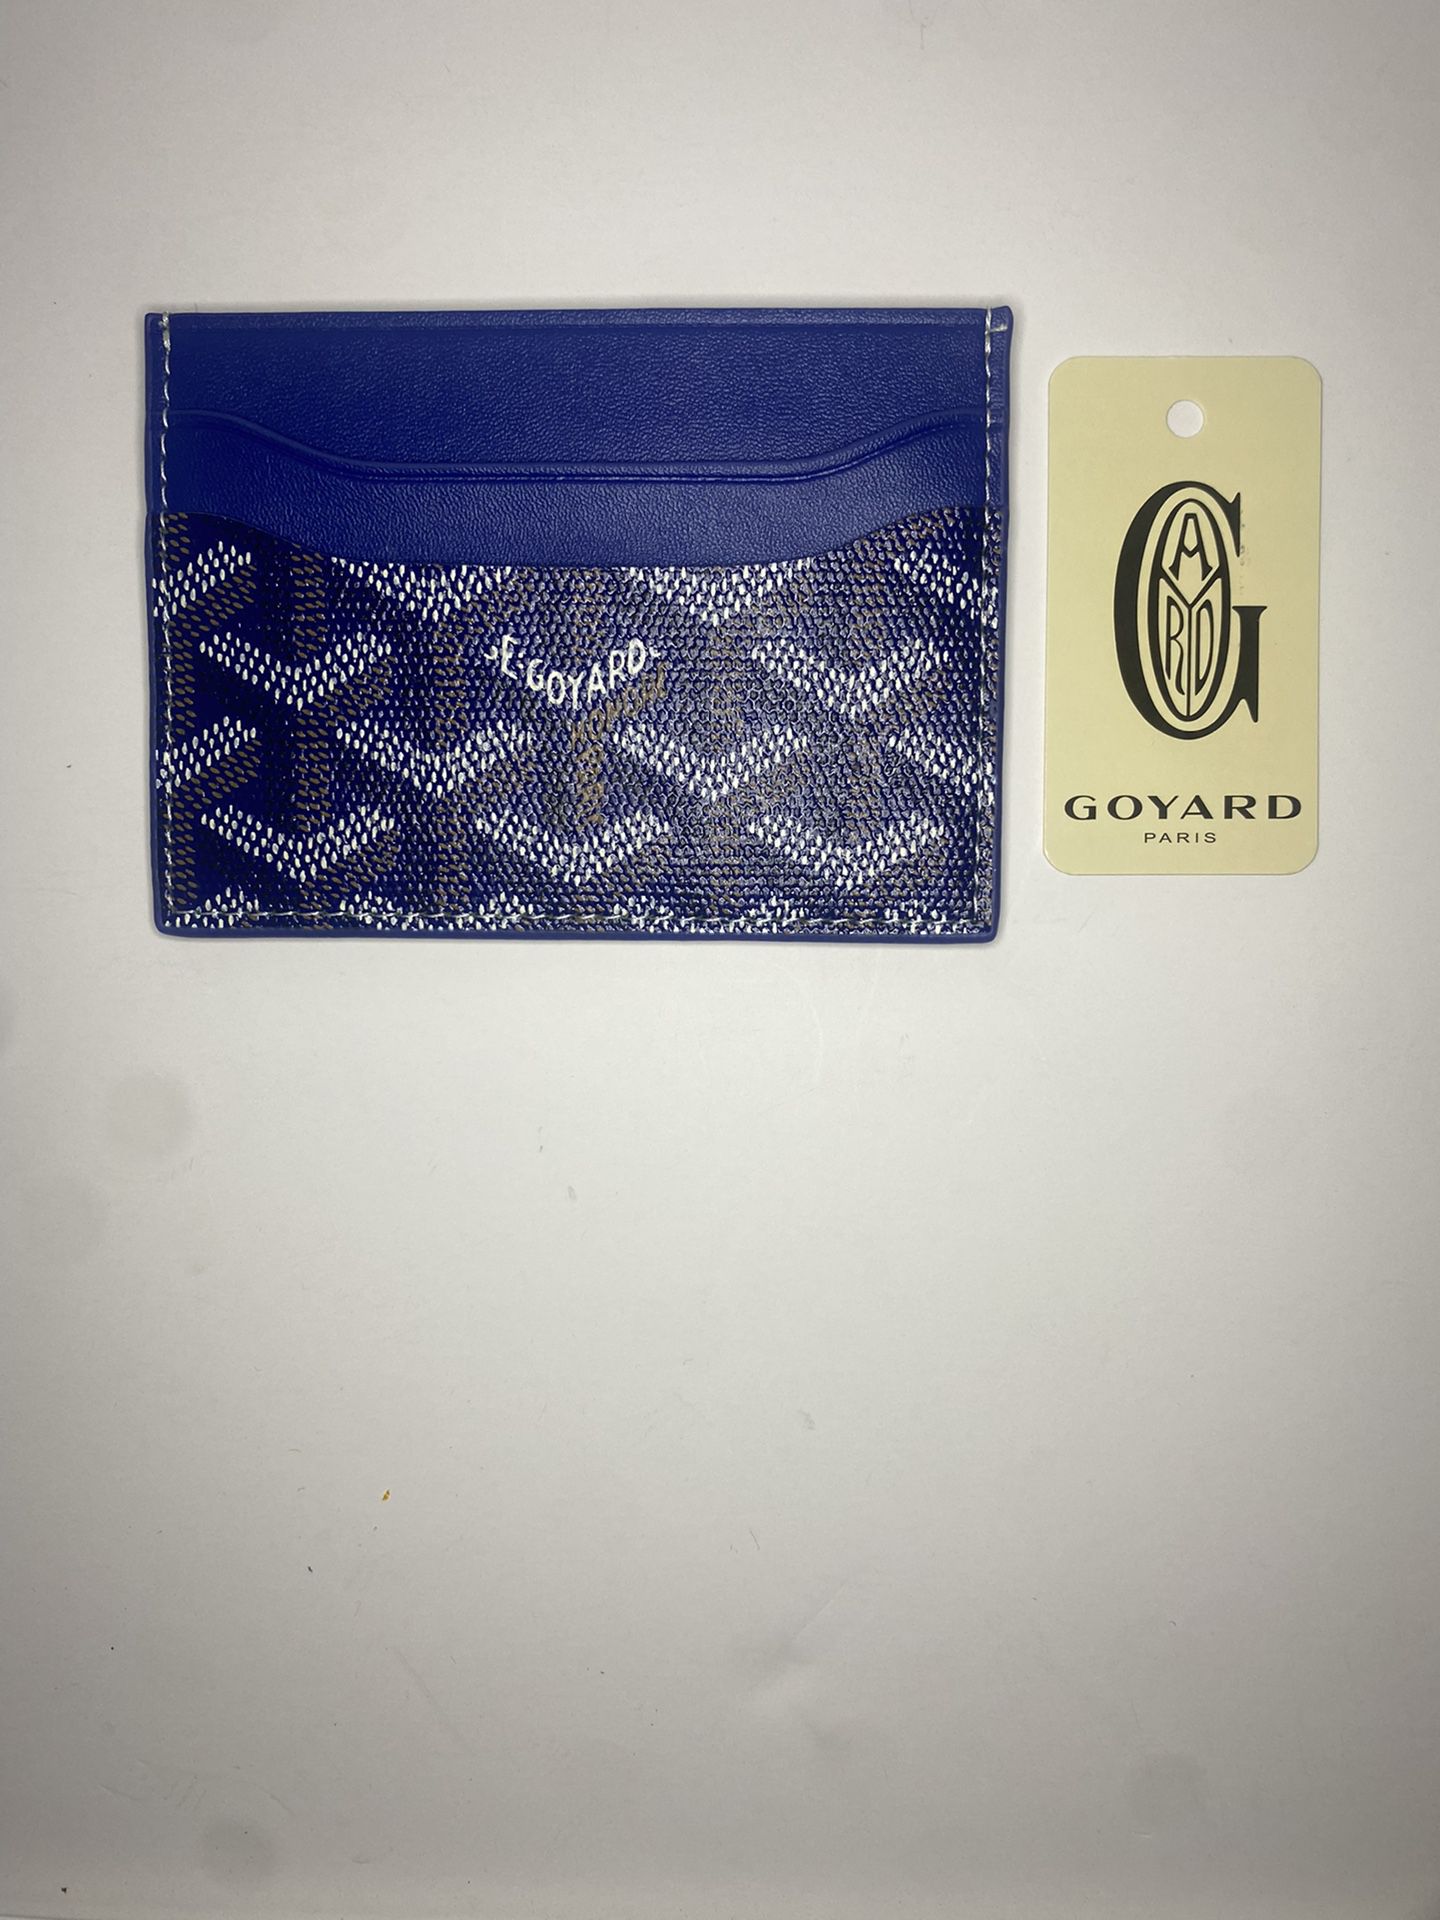 Royal Blue Goyard Card Holder for Sale in Yorba Linda, CA - OfferUp